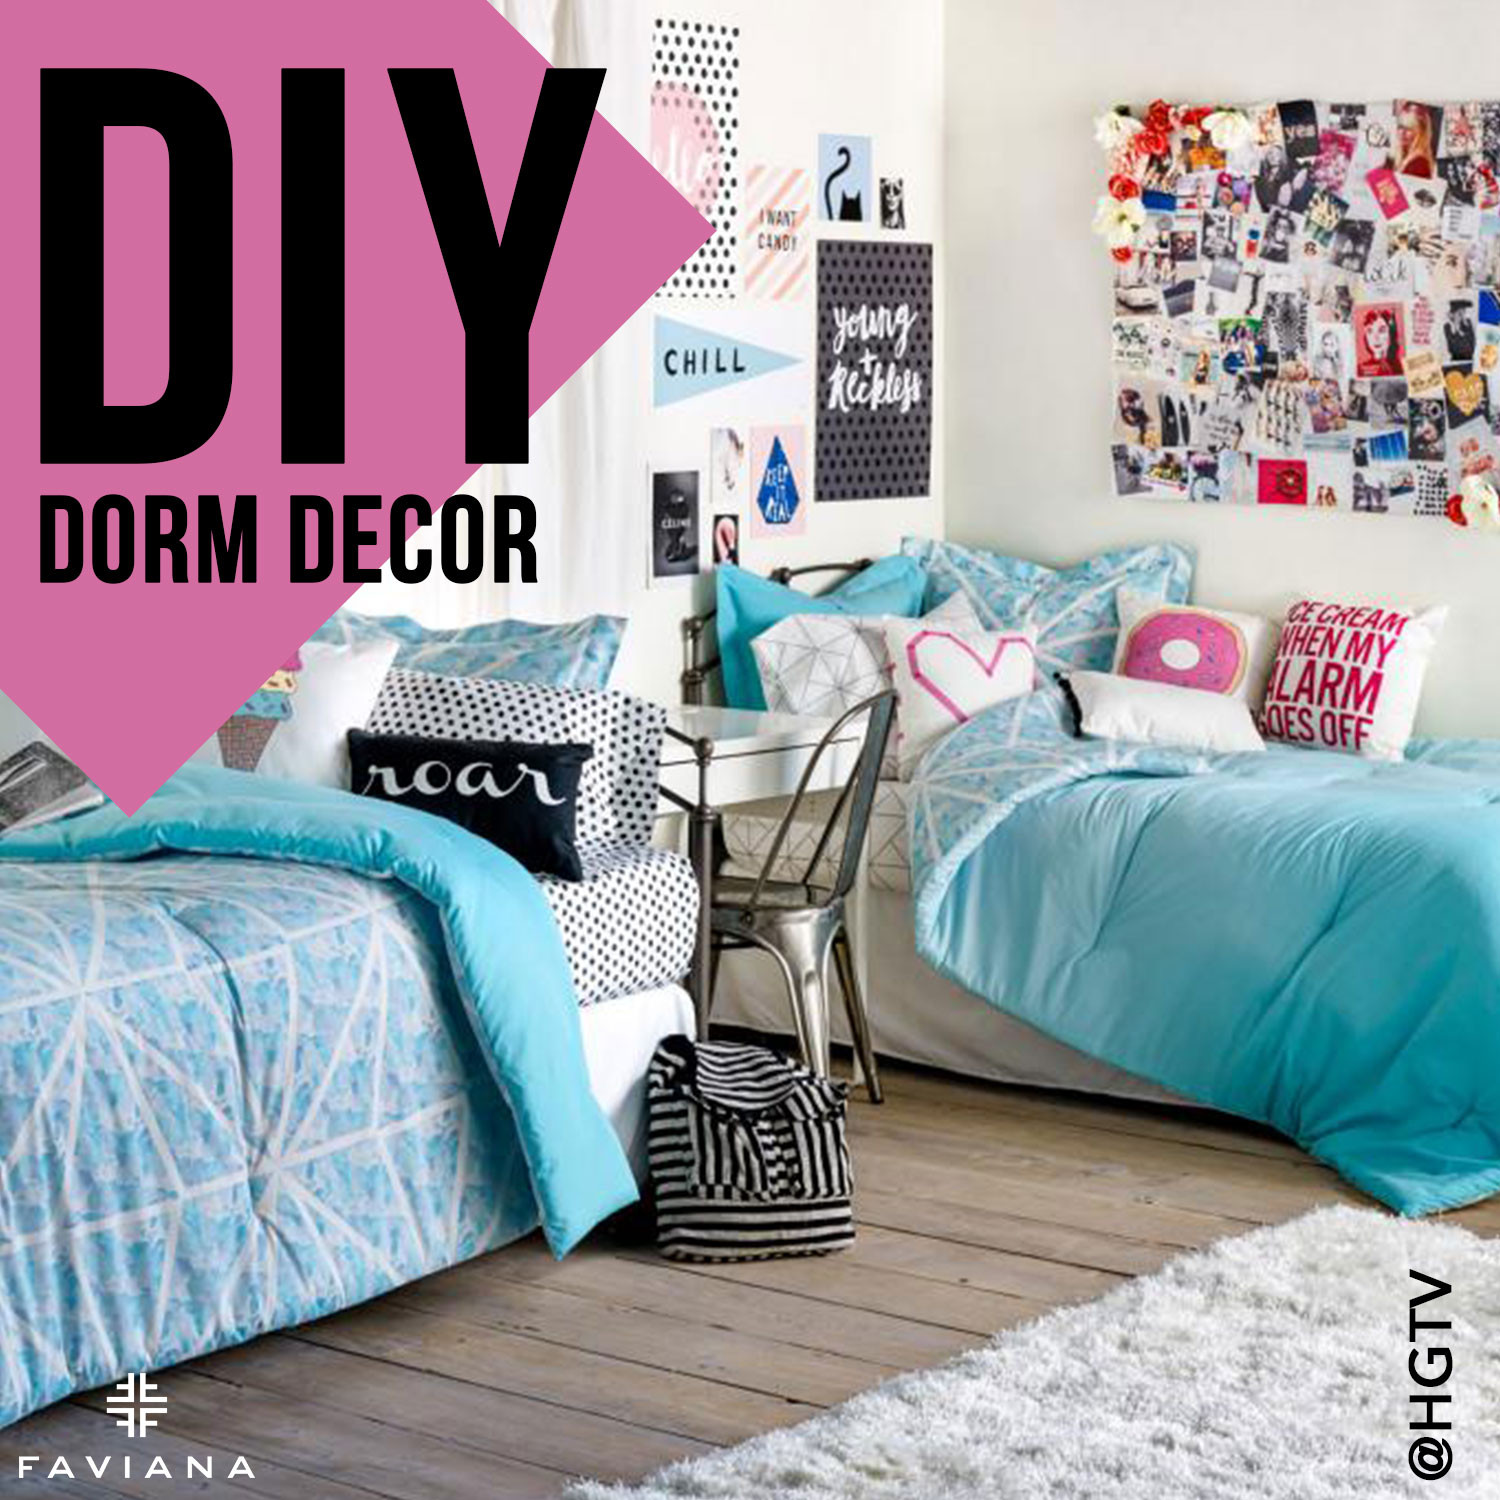 Best ideas about DIY Dorm Room
. Save or Pin DIY Dorm Decor Now.